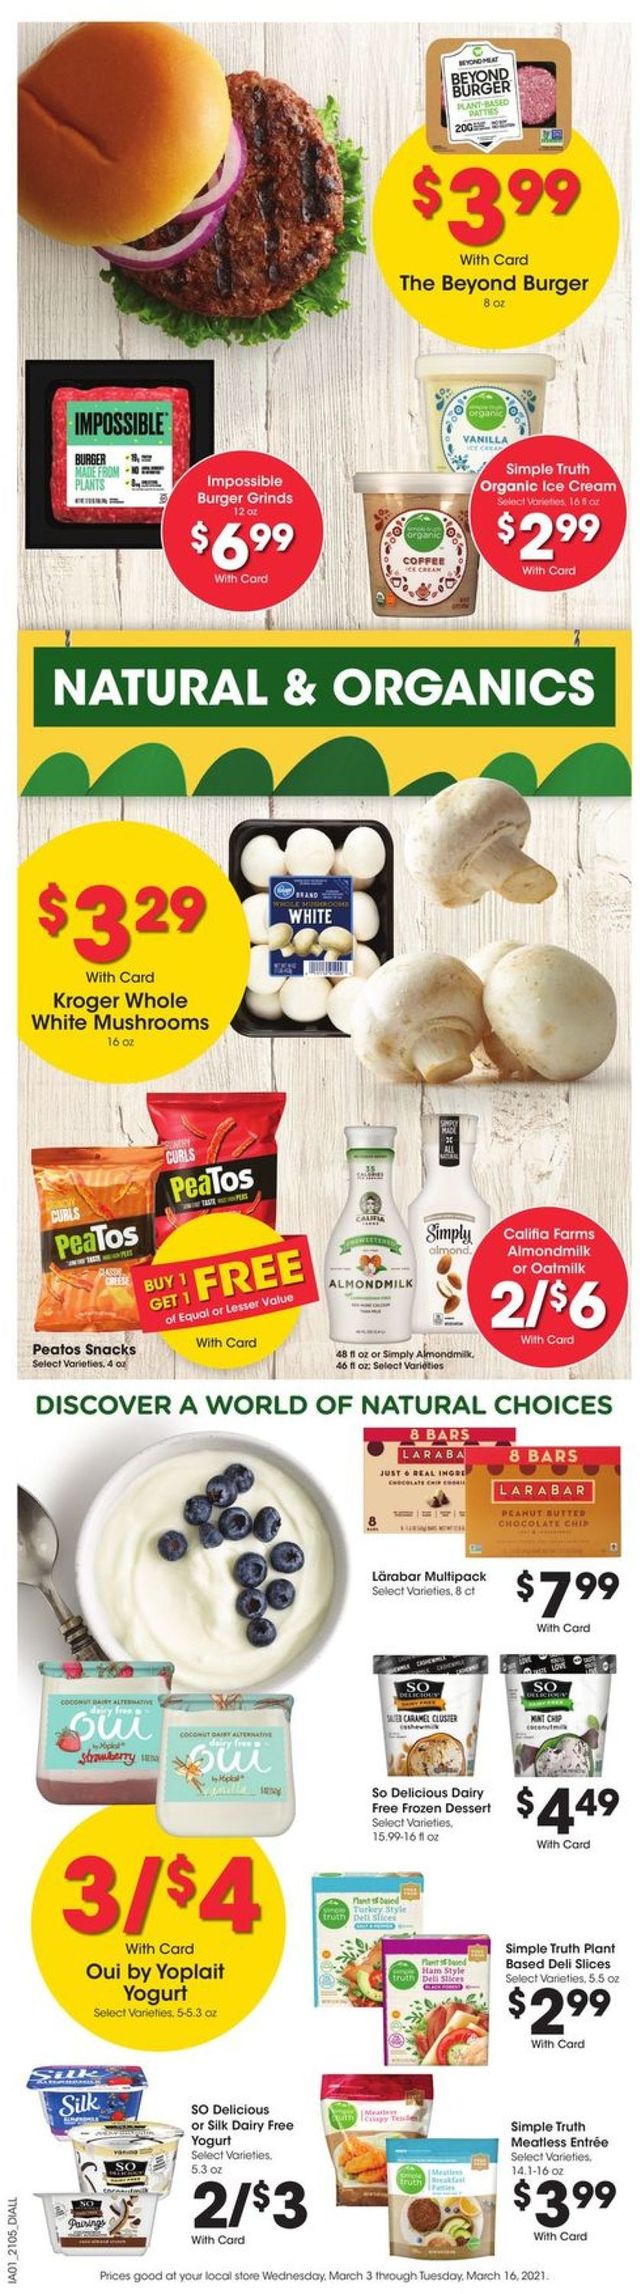 Gerbes Super Markets Ad from 03/10/2021